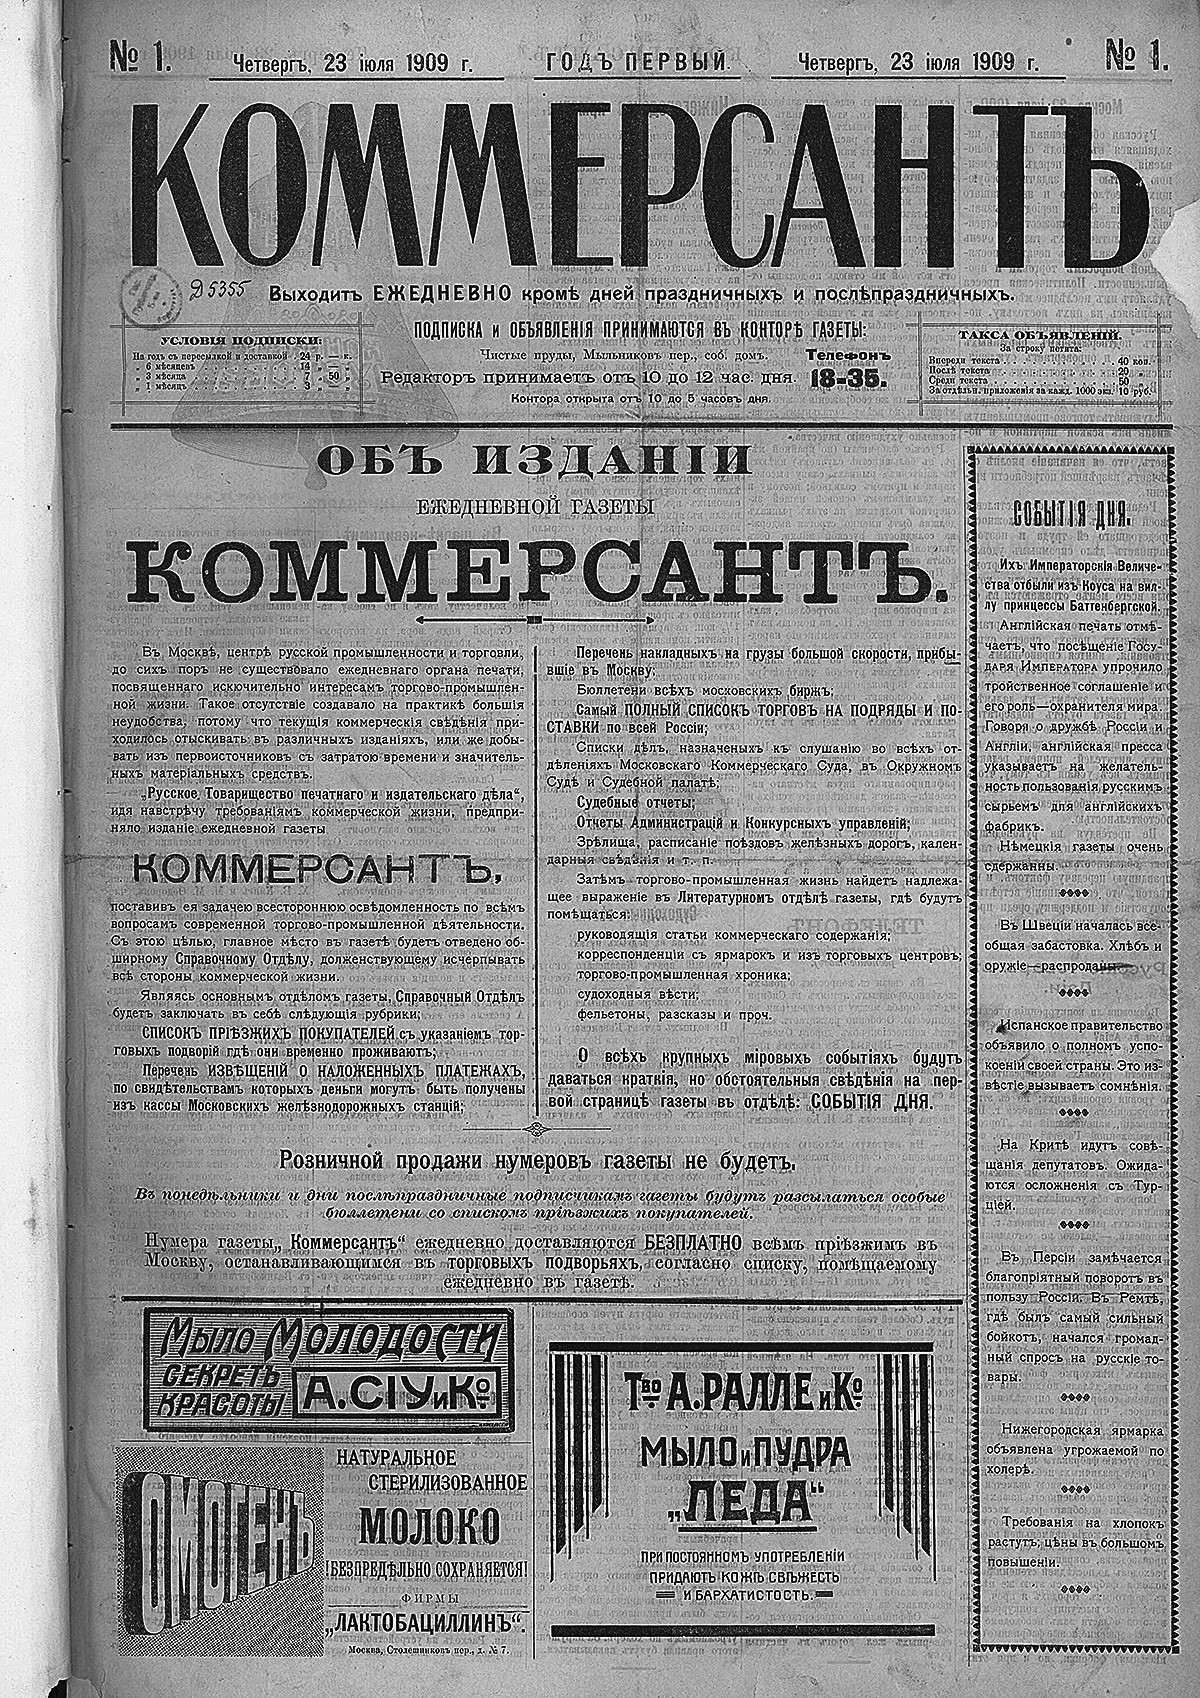 Pre-revolutionary Kommersant newspaper, 1909
